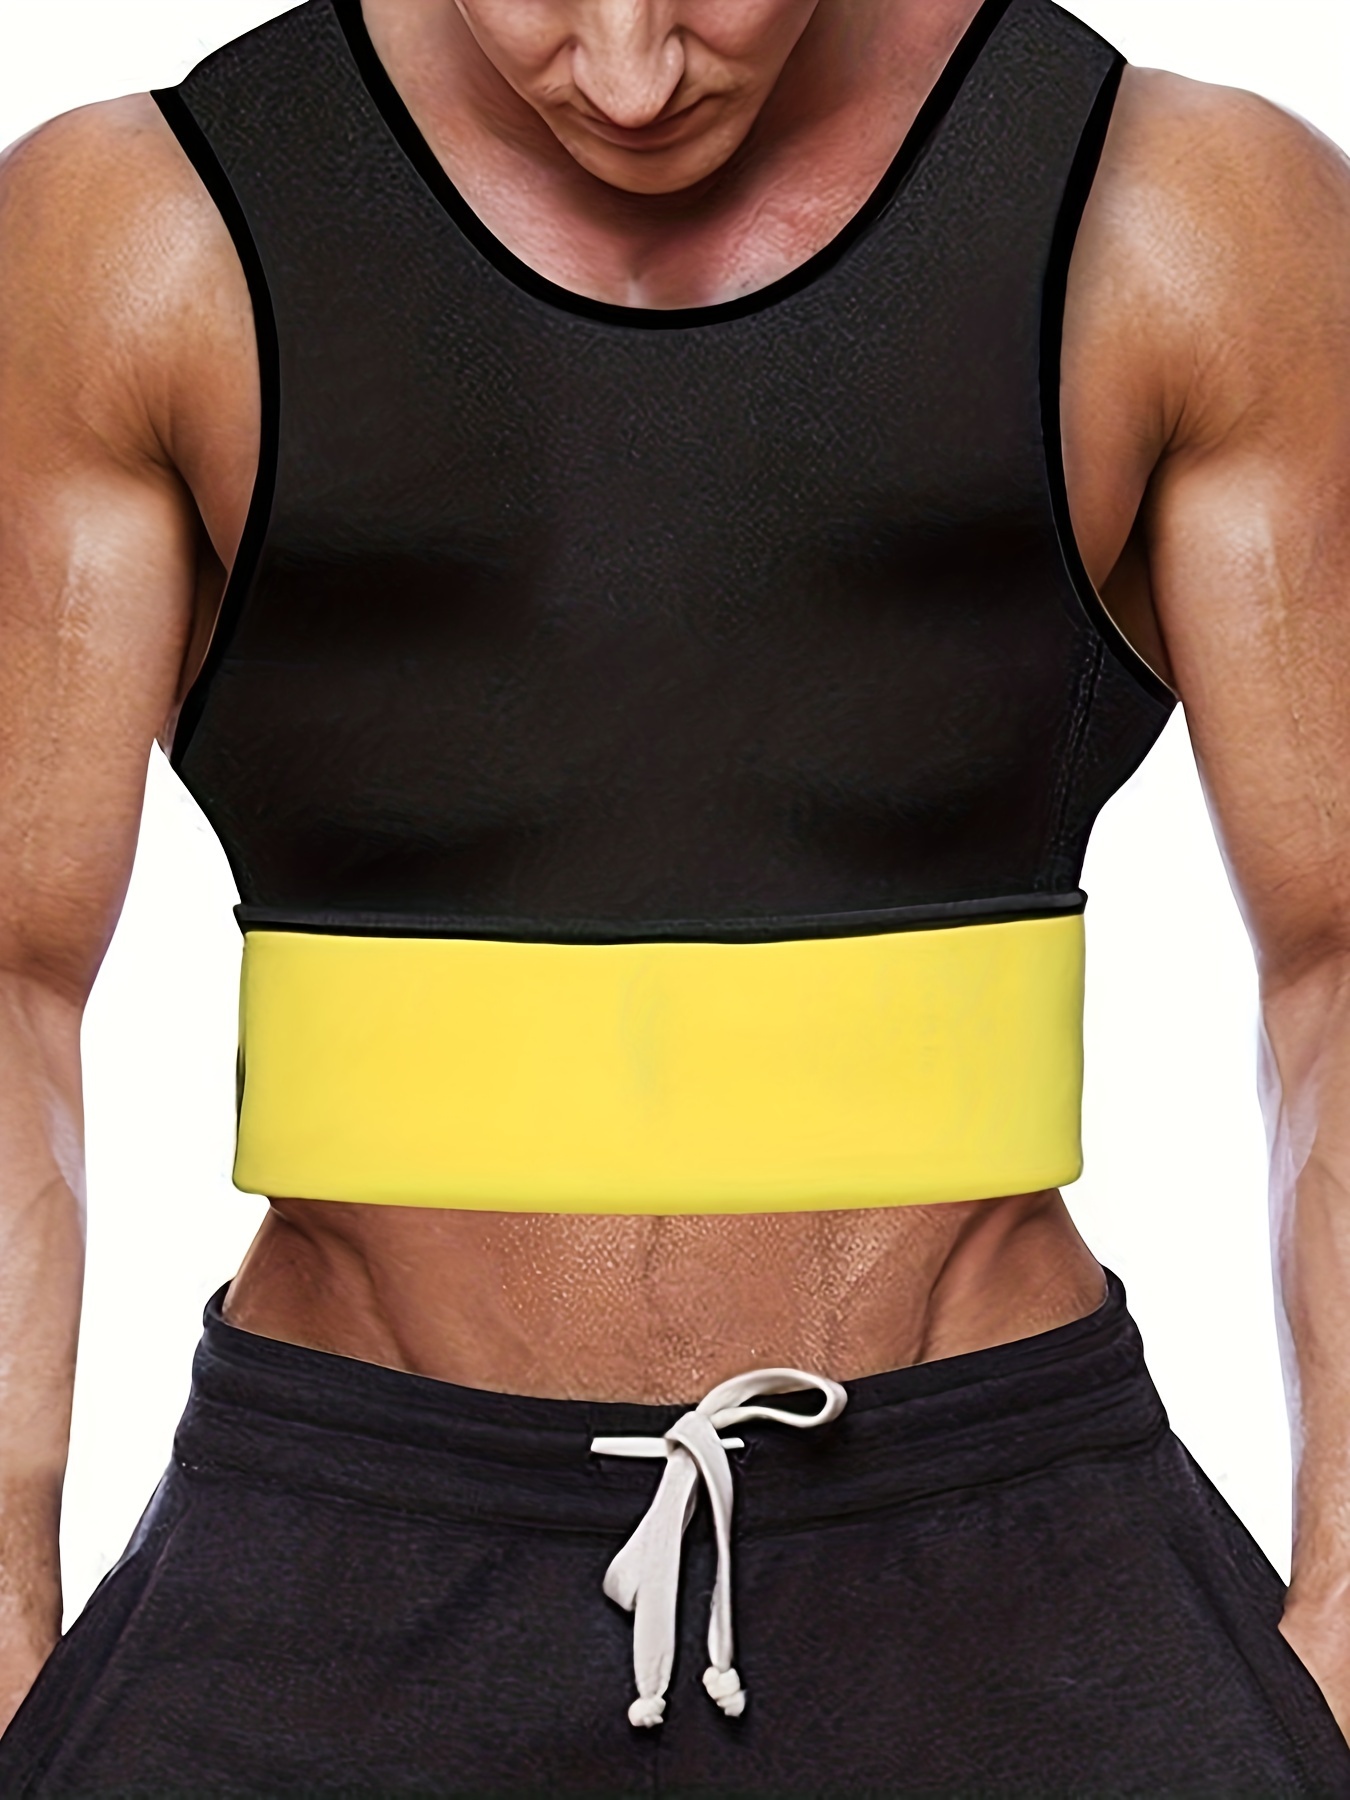 Men Sauna Tank Top Slimming Body Shaper Vest Gym Athletic Sweat